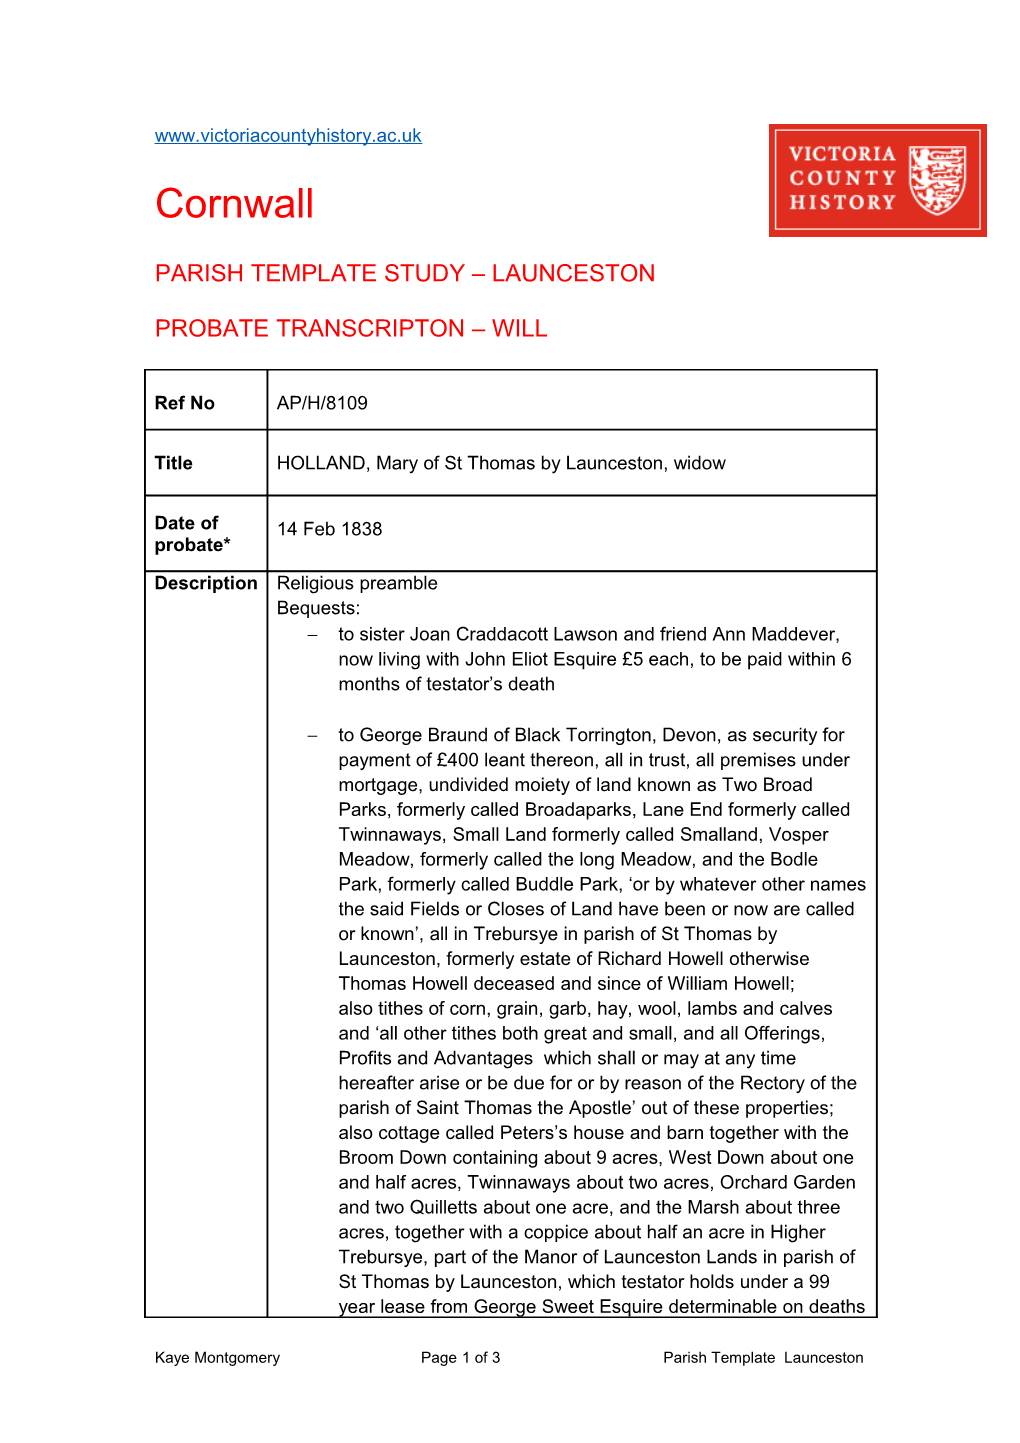 Parish Template Study Launceston s9